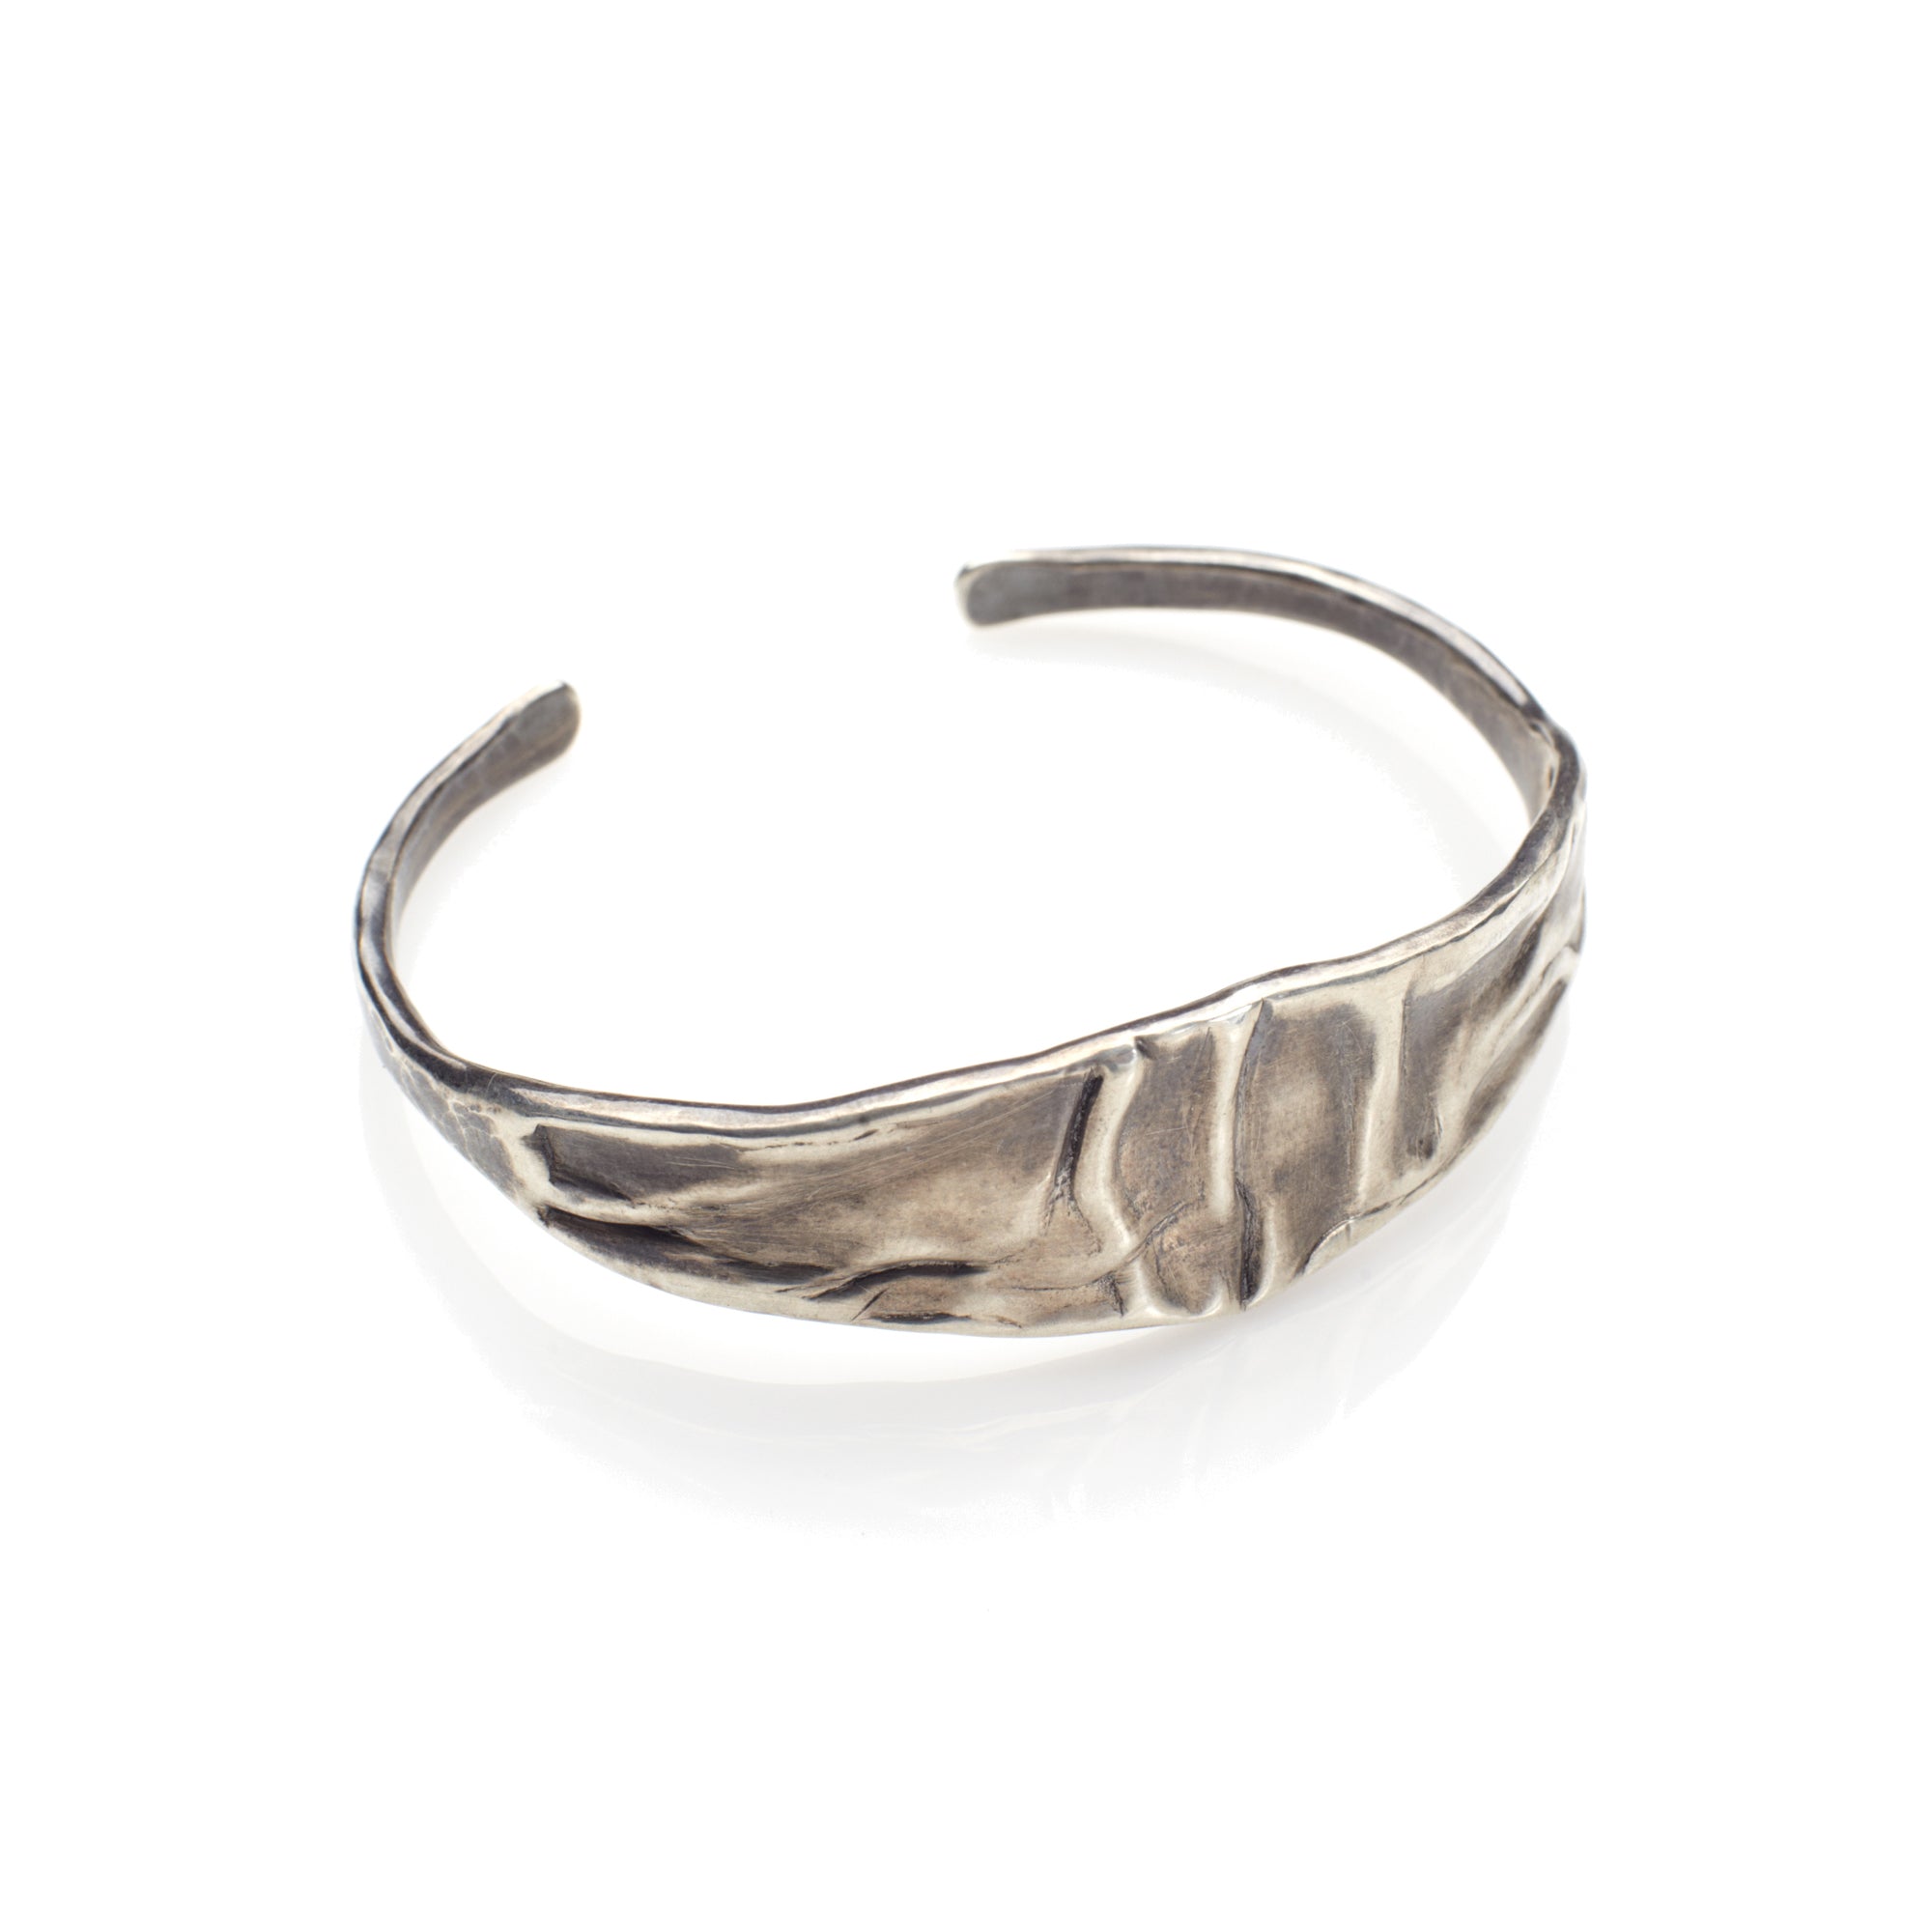 The Shoal Cuff is a bold organic cuff bracelet in oxidized sterling silver.